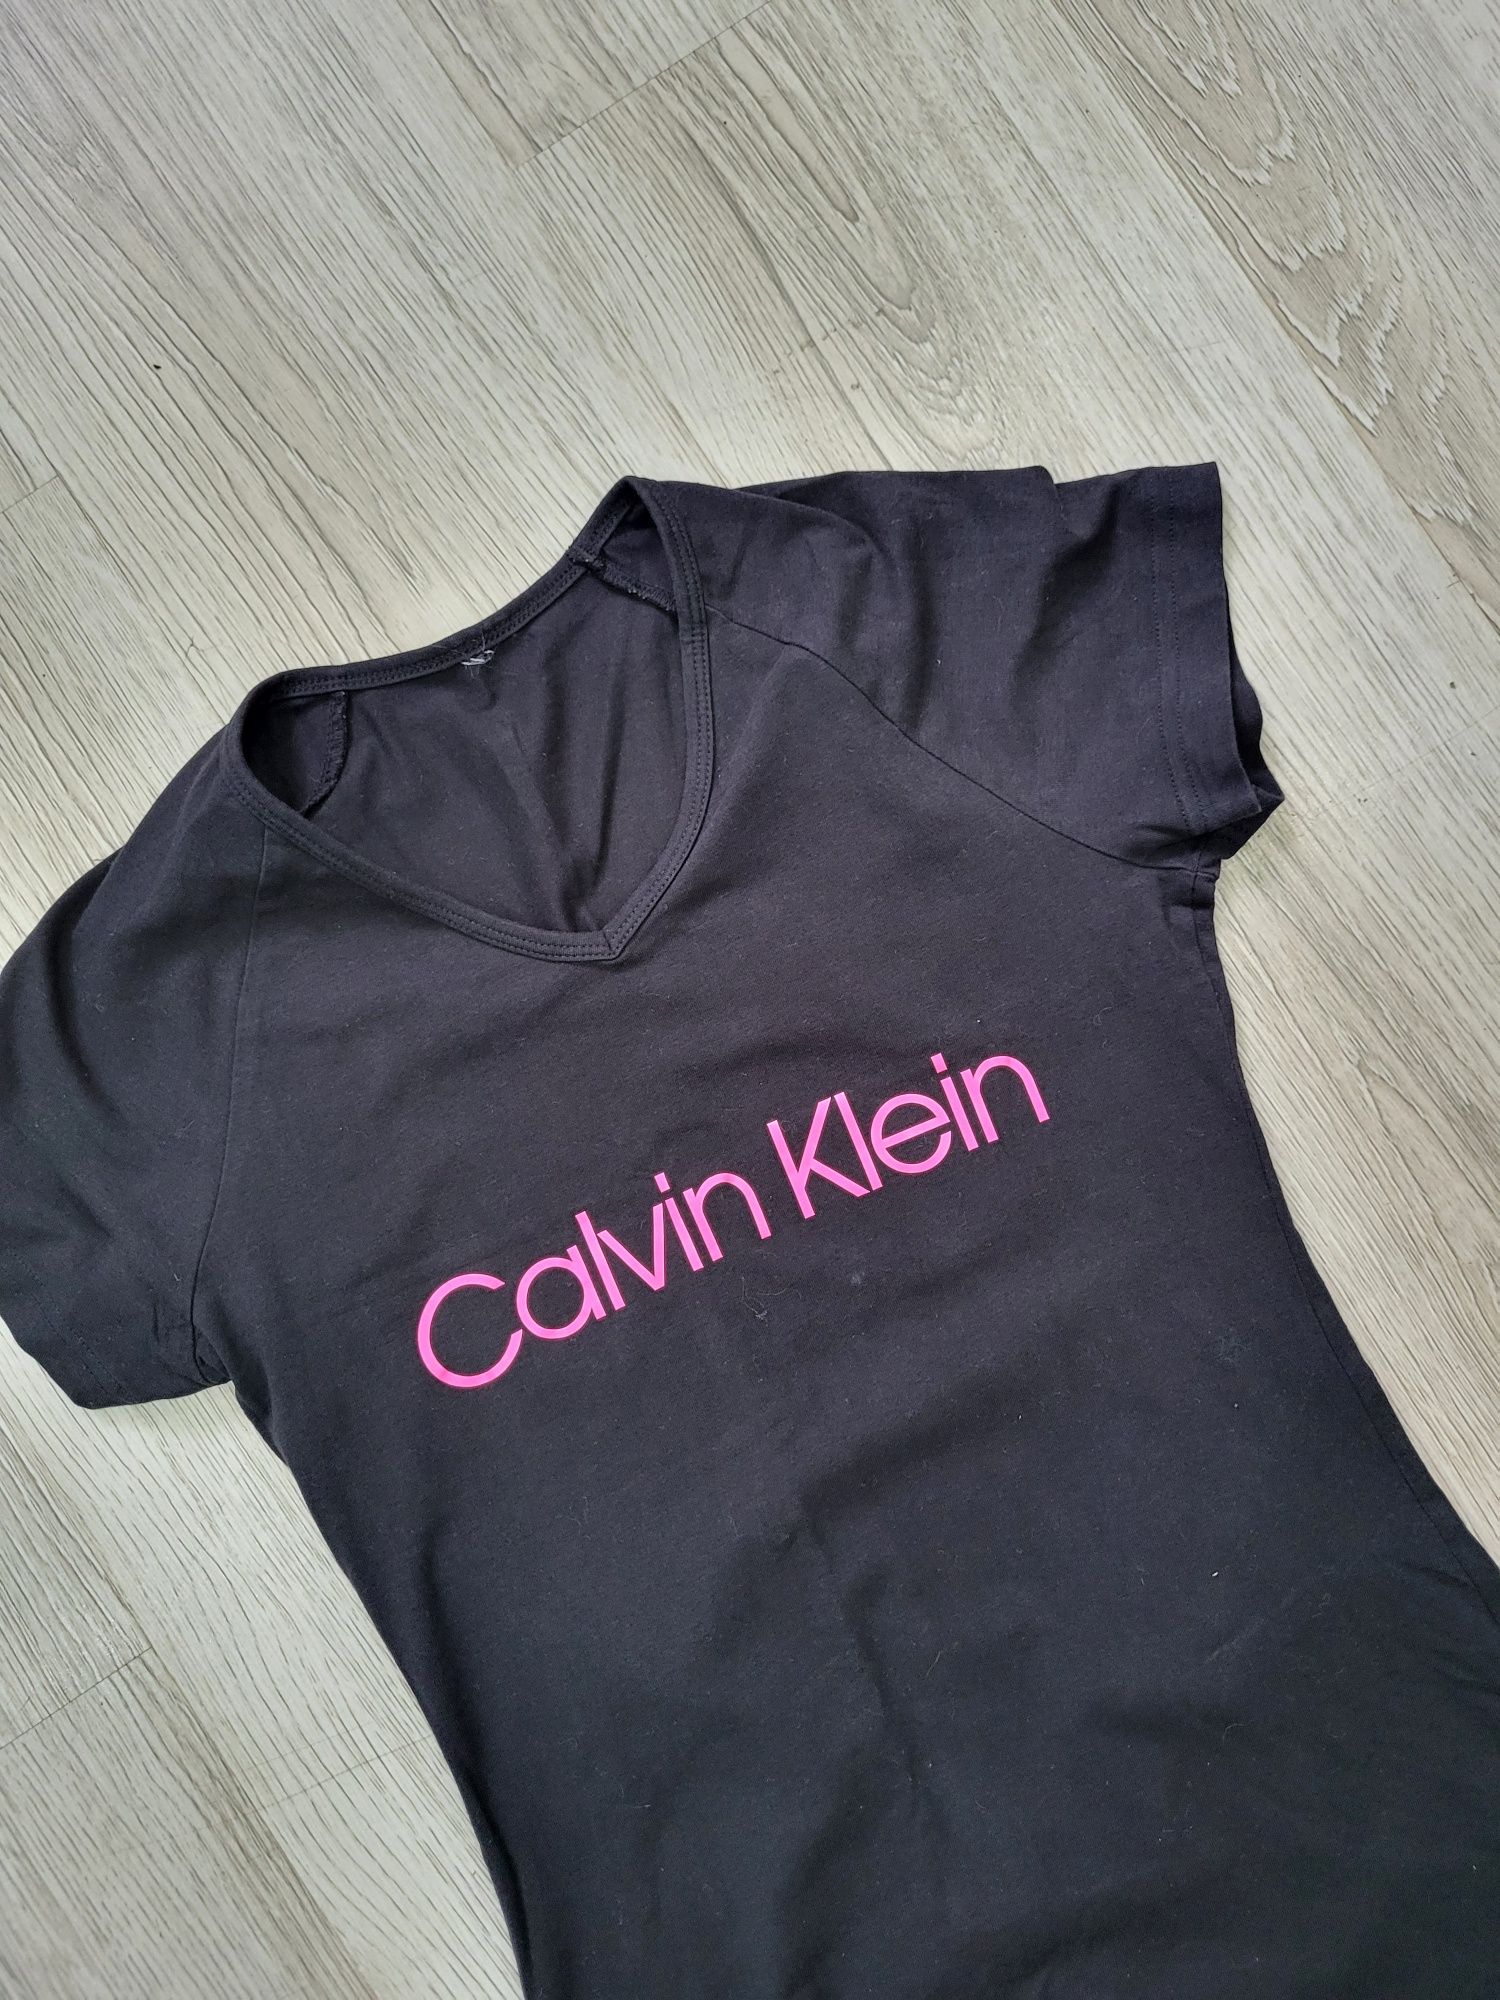 Calvin Klein tshirt czarny S 36